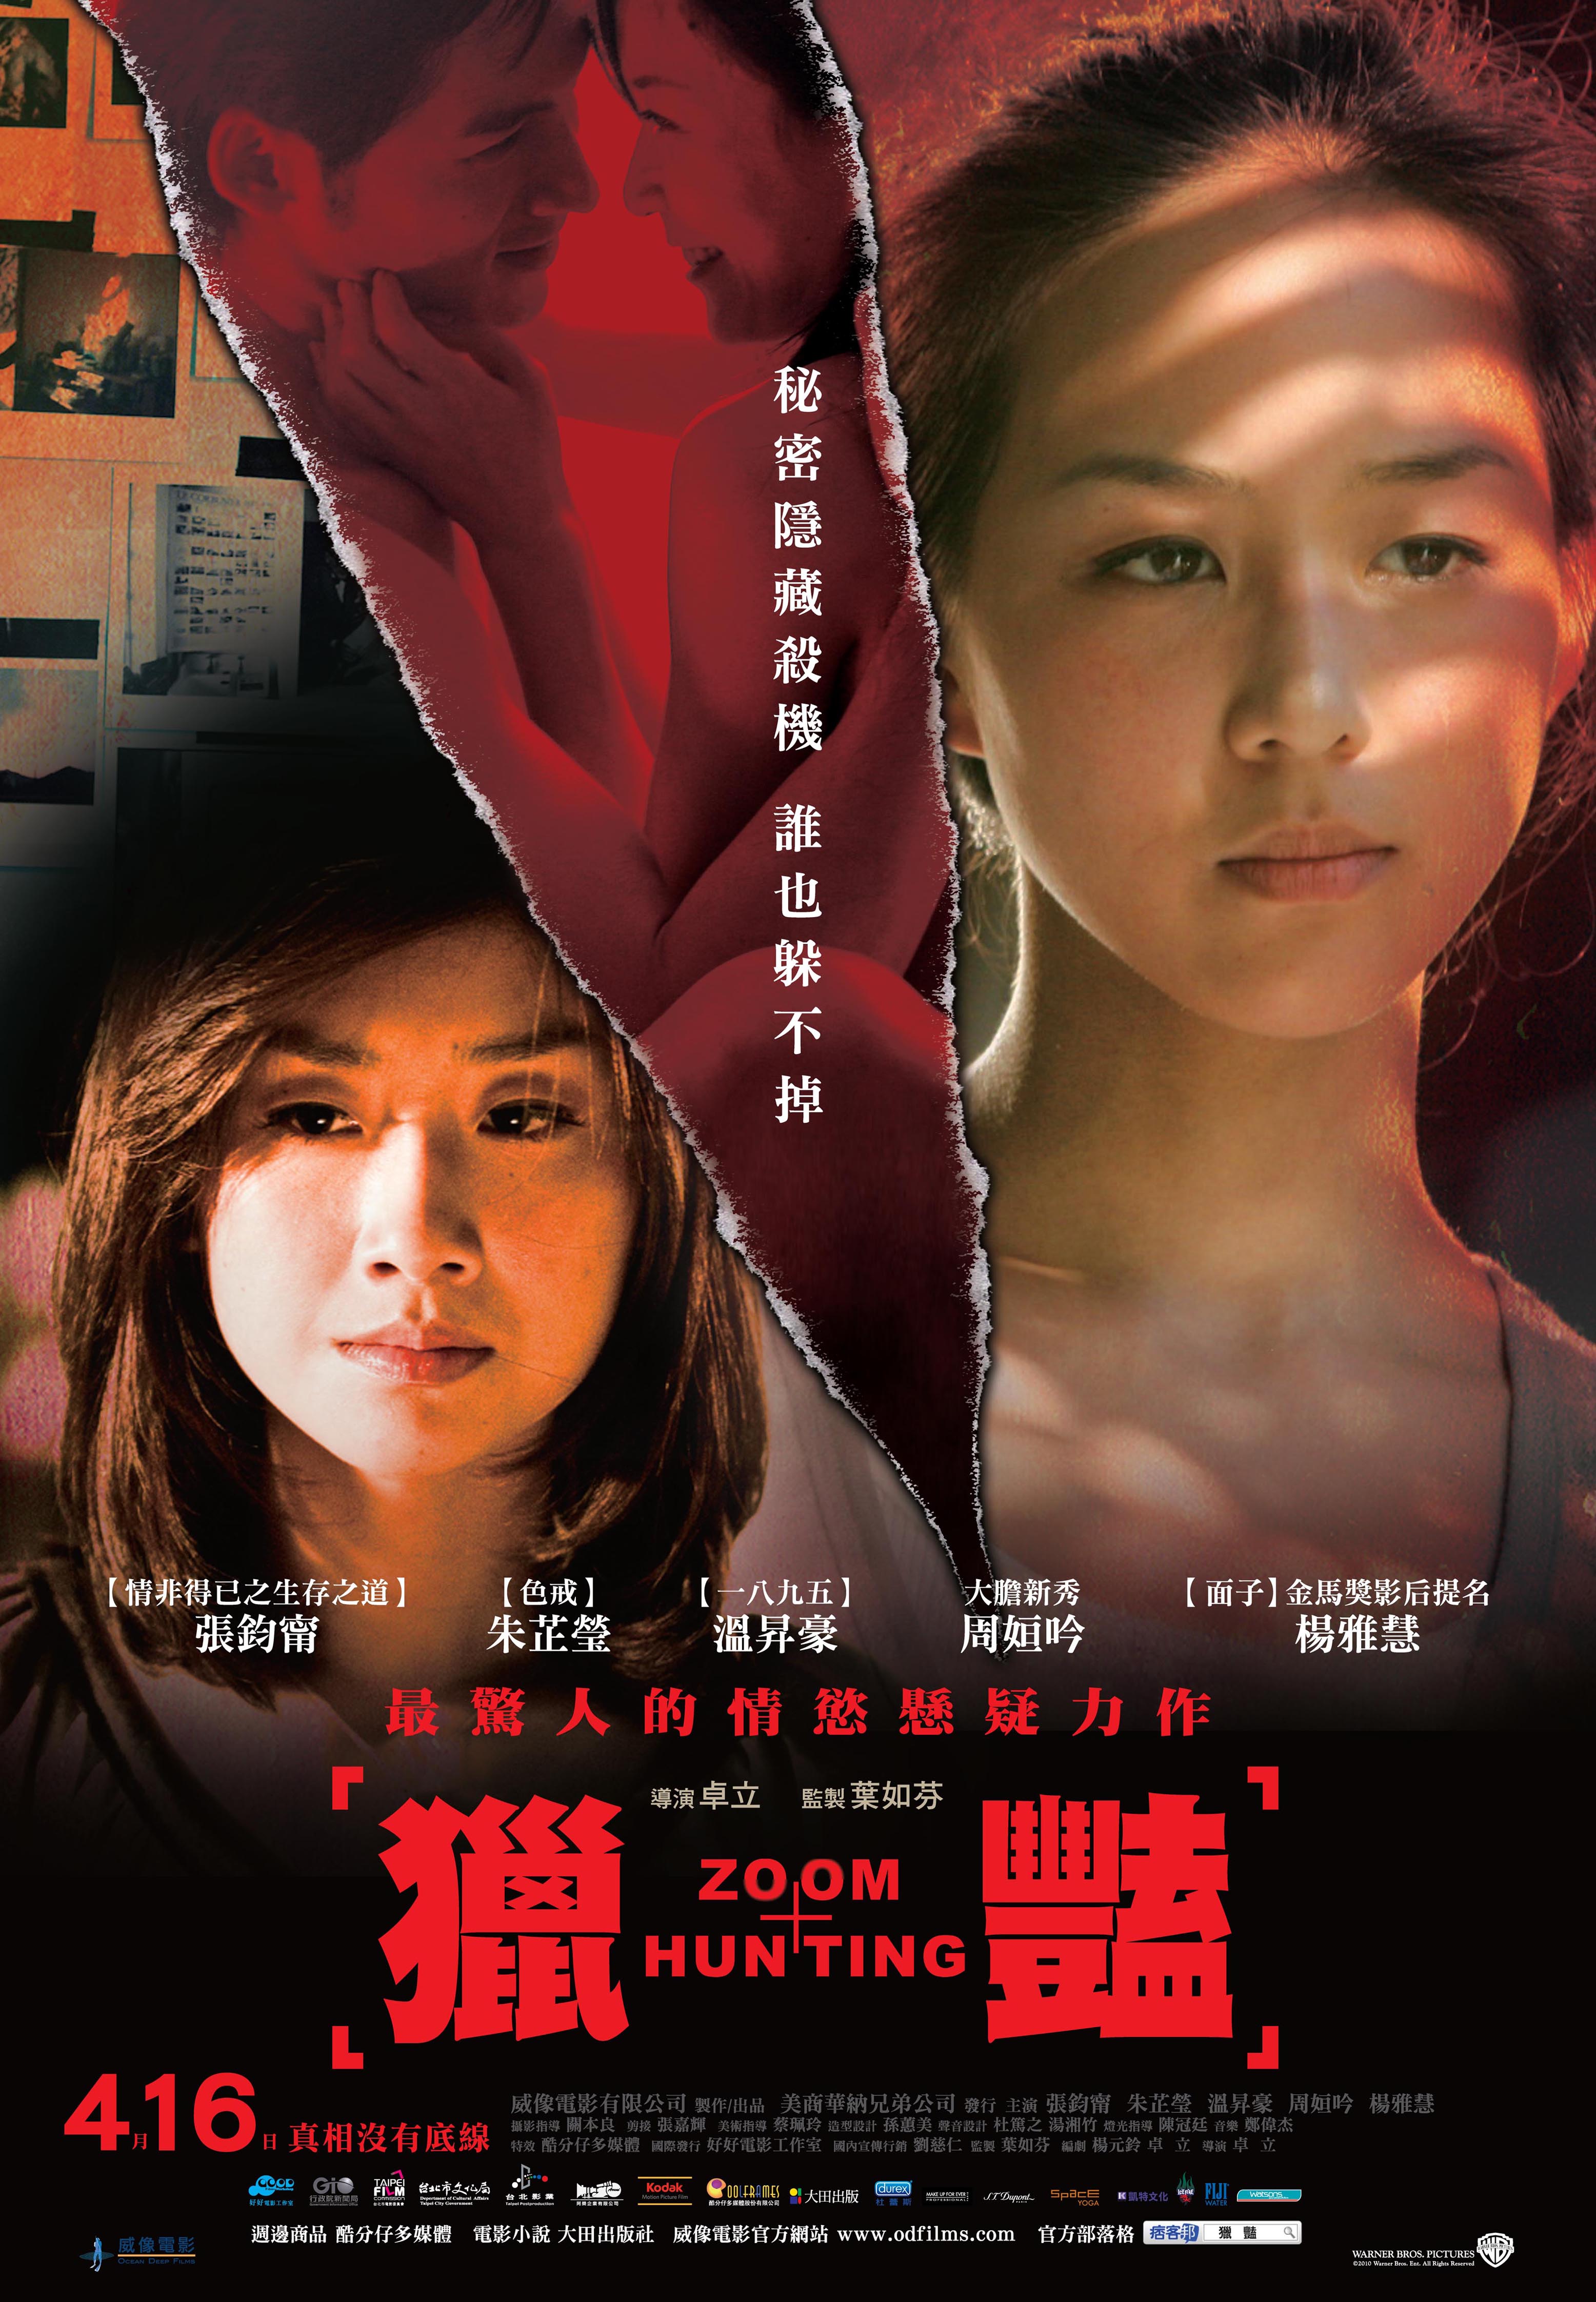 Lie yan (2010) with English Subtitles on DVD on DVD